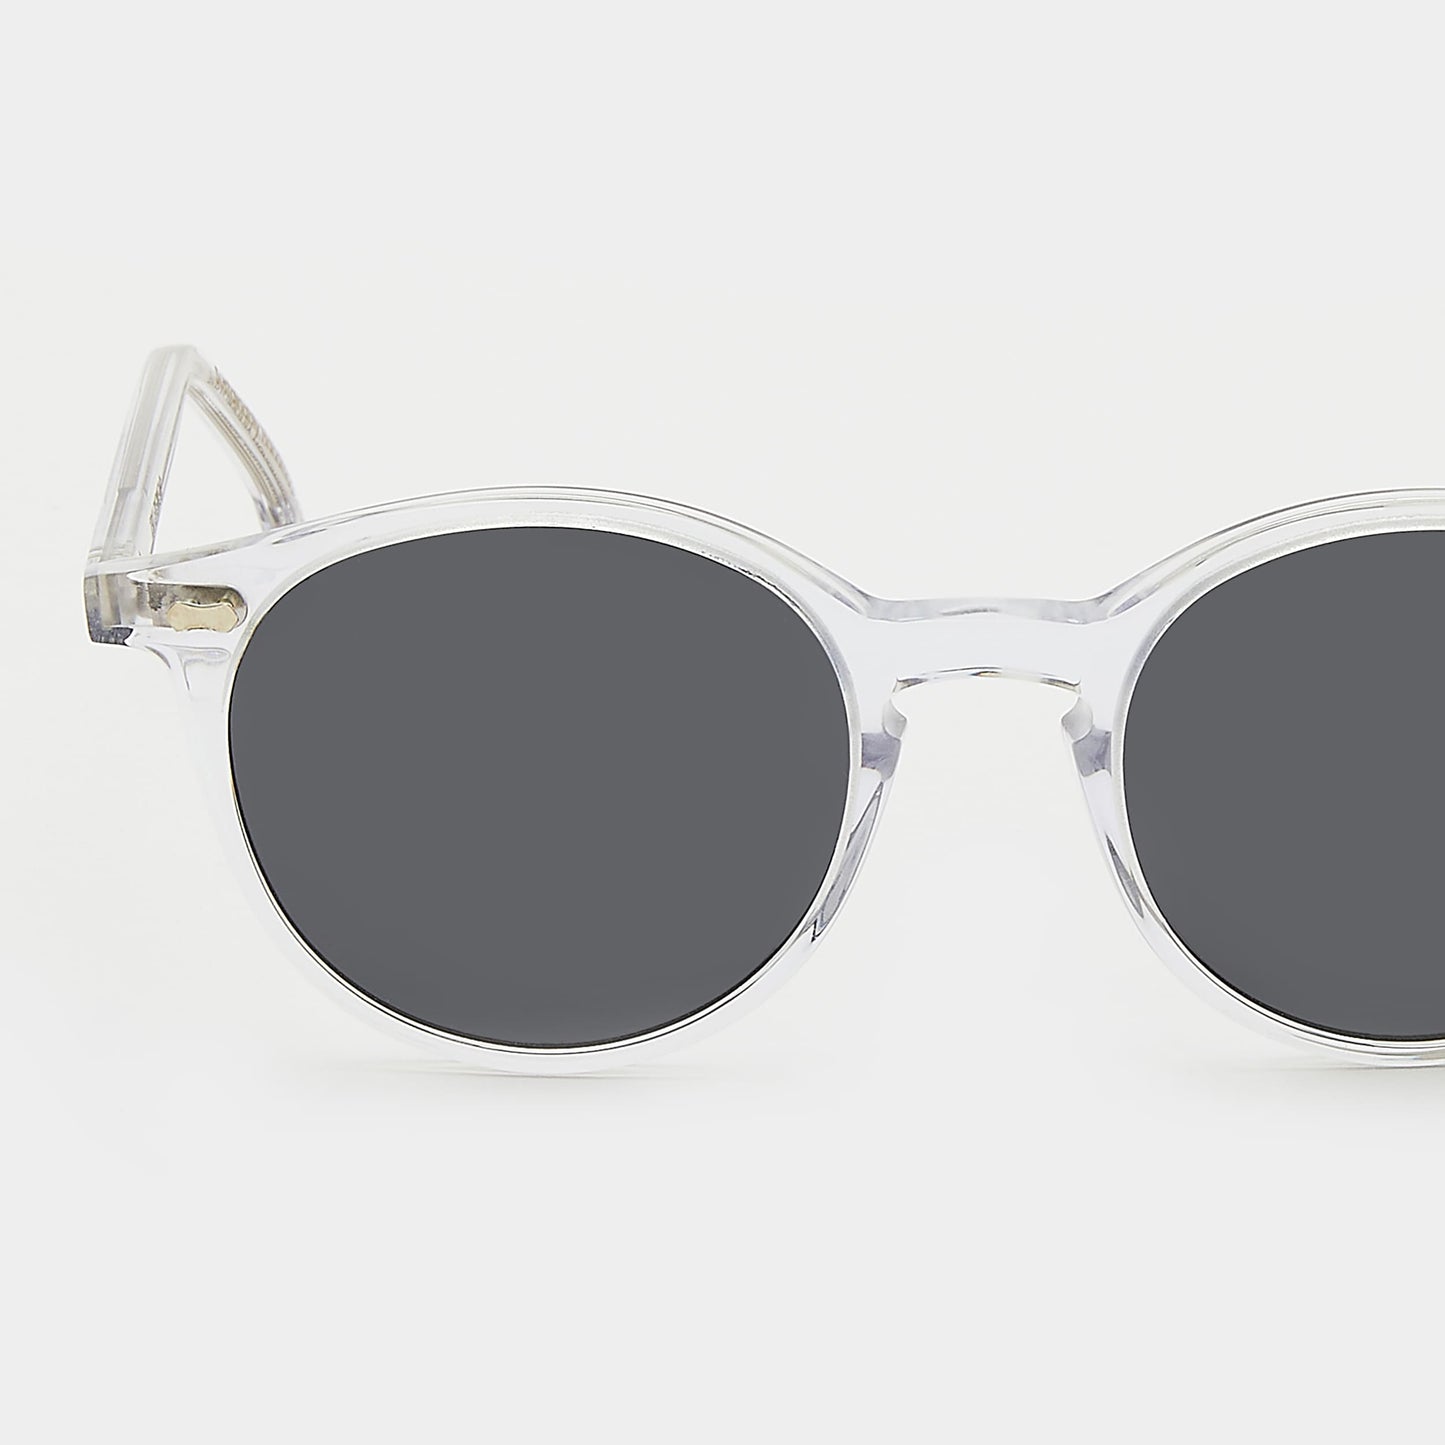 TBD Eyewear Cran Eco Transparent / Grey